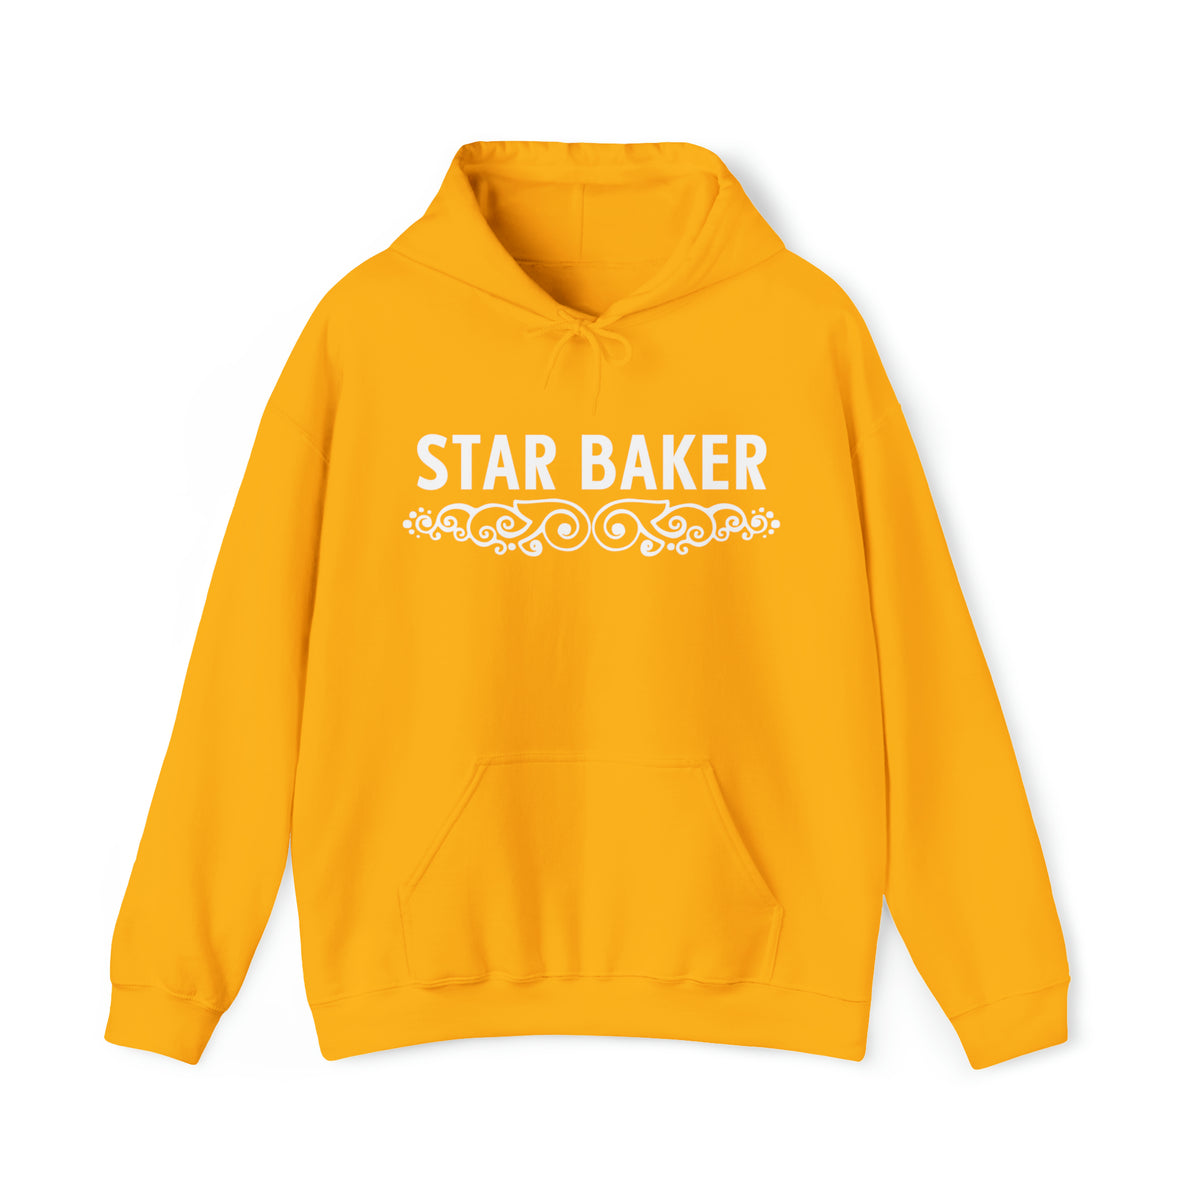 Star Baker British Baking Shirt | Baker Gifts | Unisex Hoodie Sweatshirt